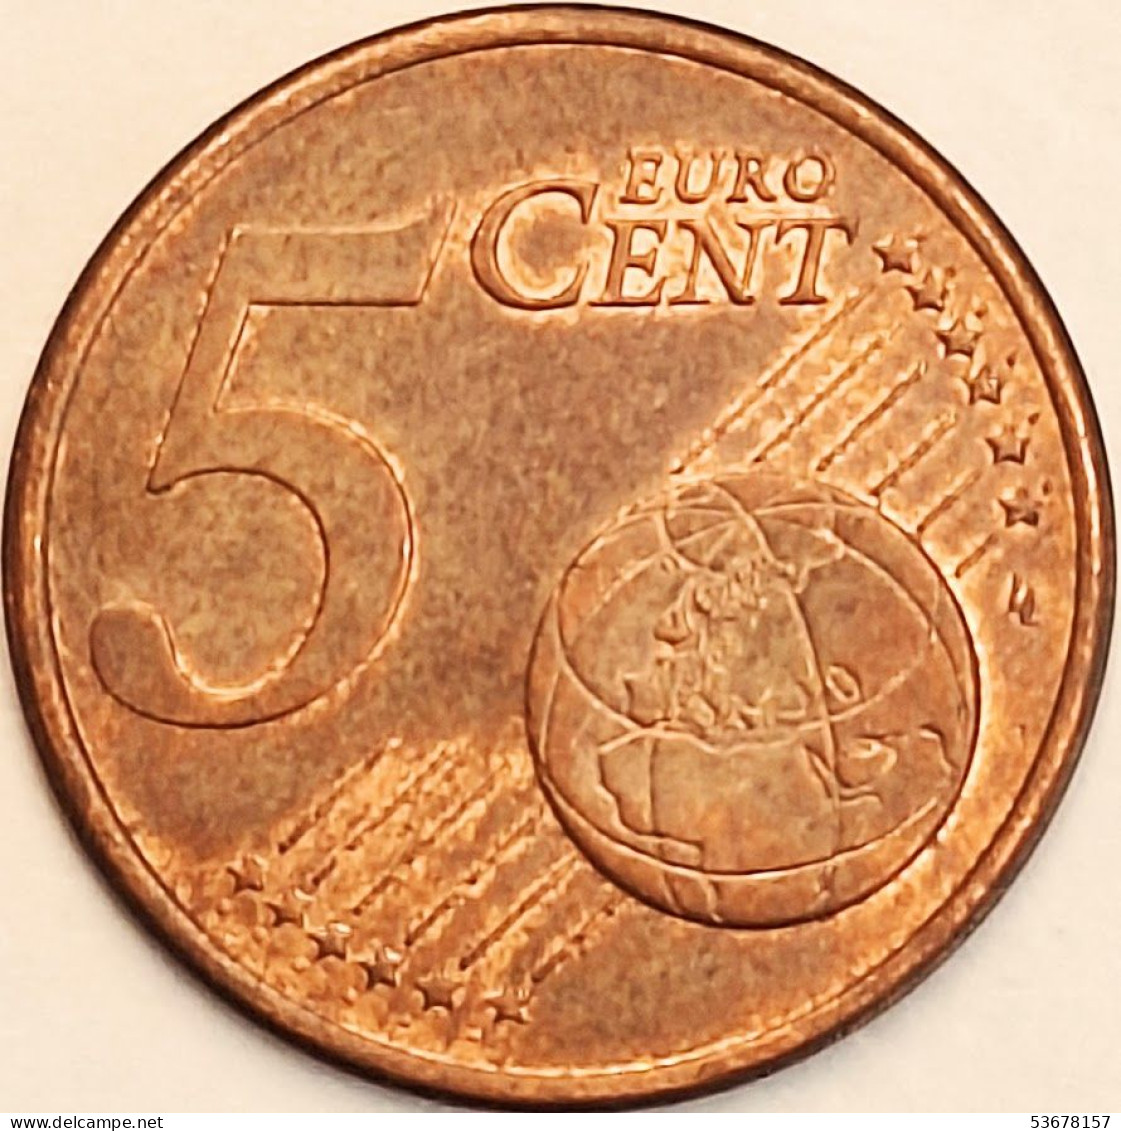 France - 5 Euro Cent 2008, KM# 1284 (#4384) - Frankreich